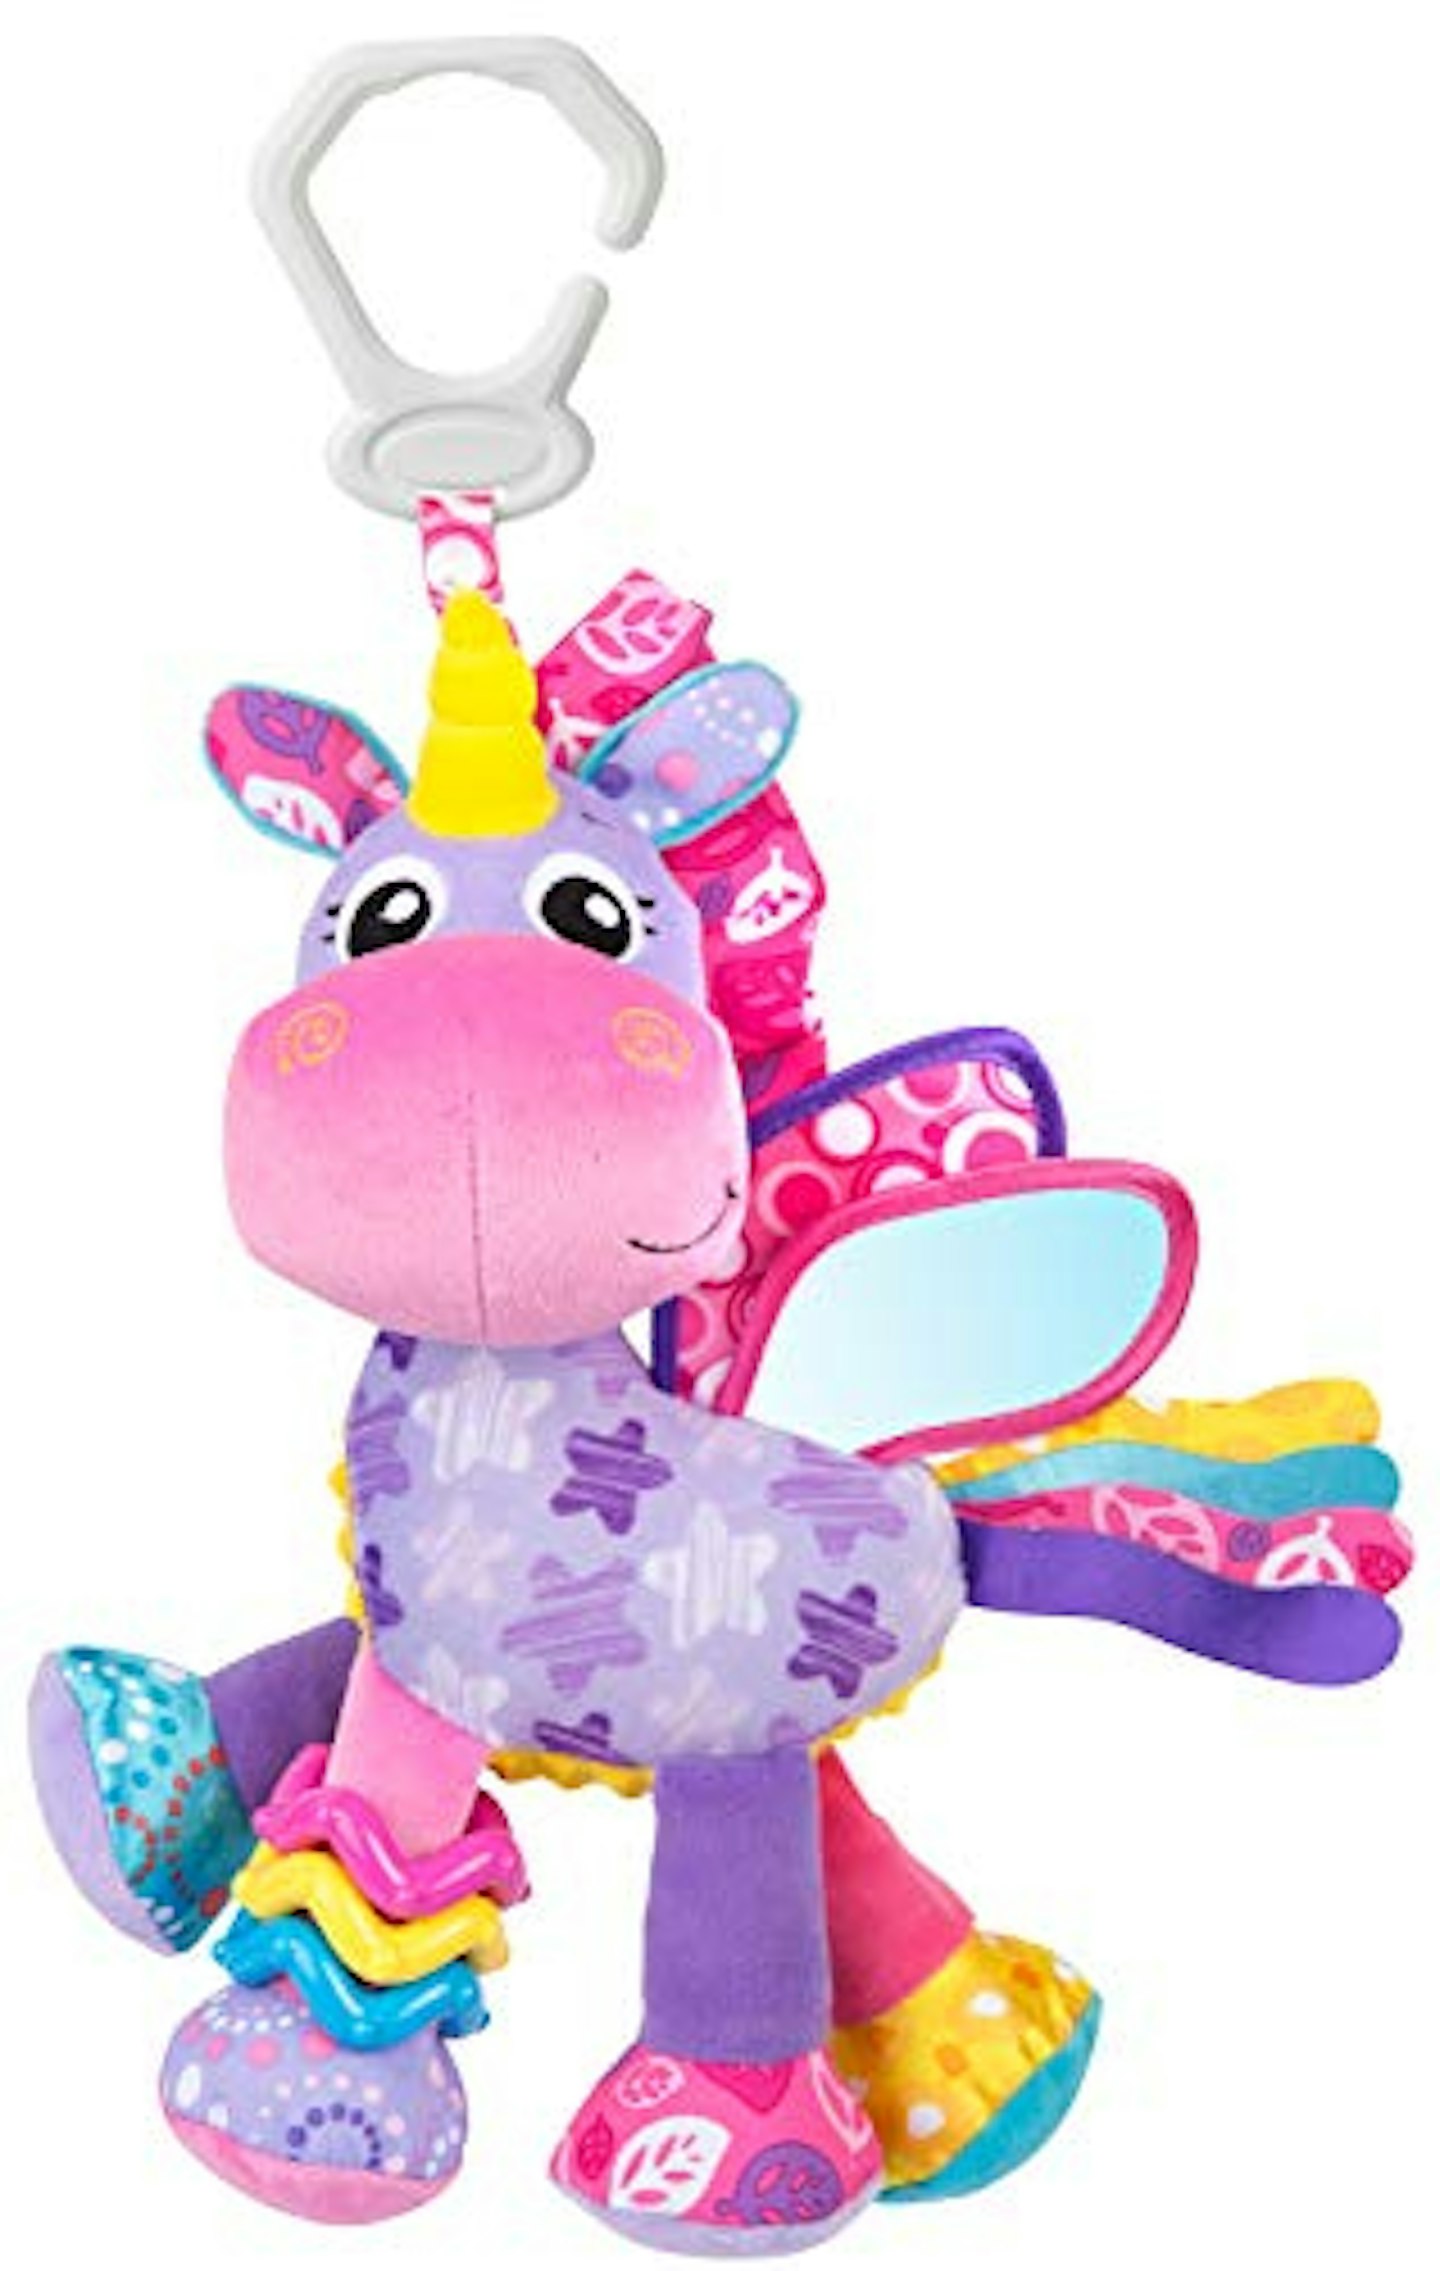 Playgro Activity Friend Unicorn Stella Pram Toy